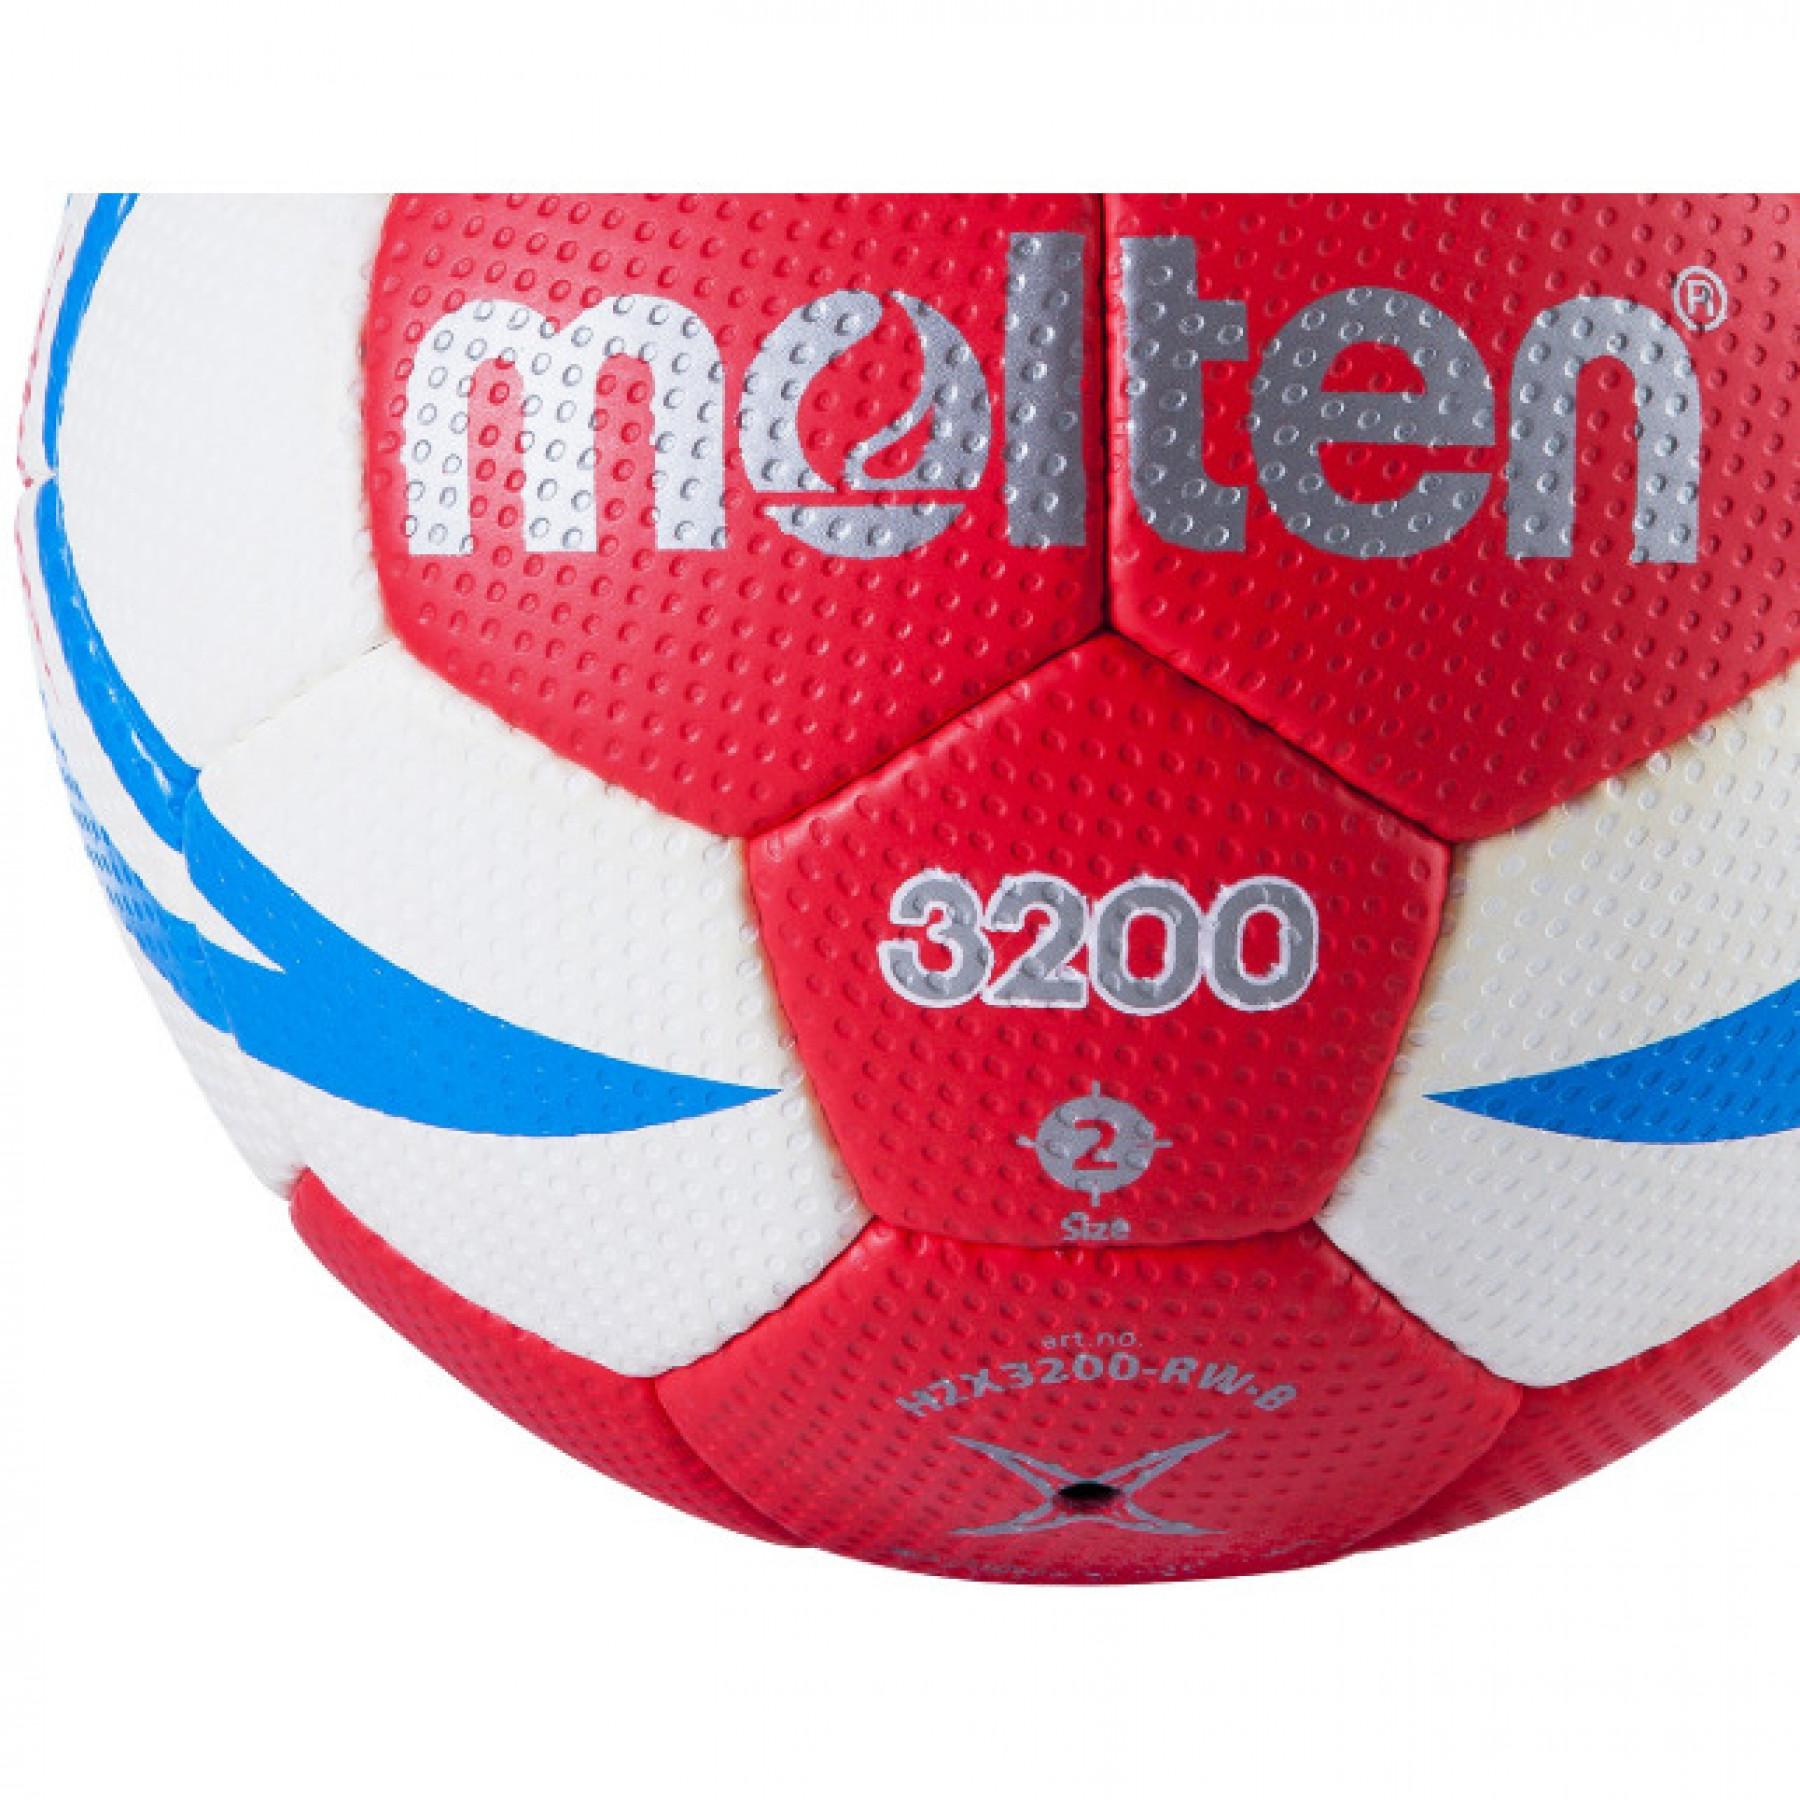 Training ball Molten HX3200 FFHB taille 2